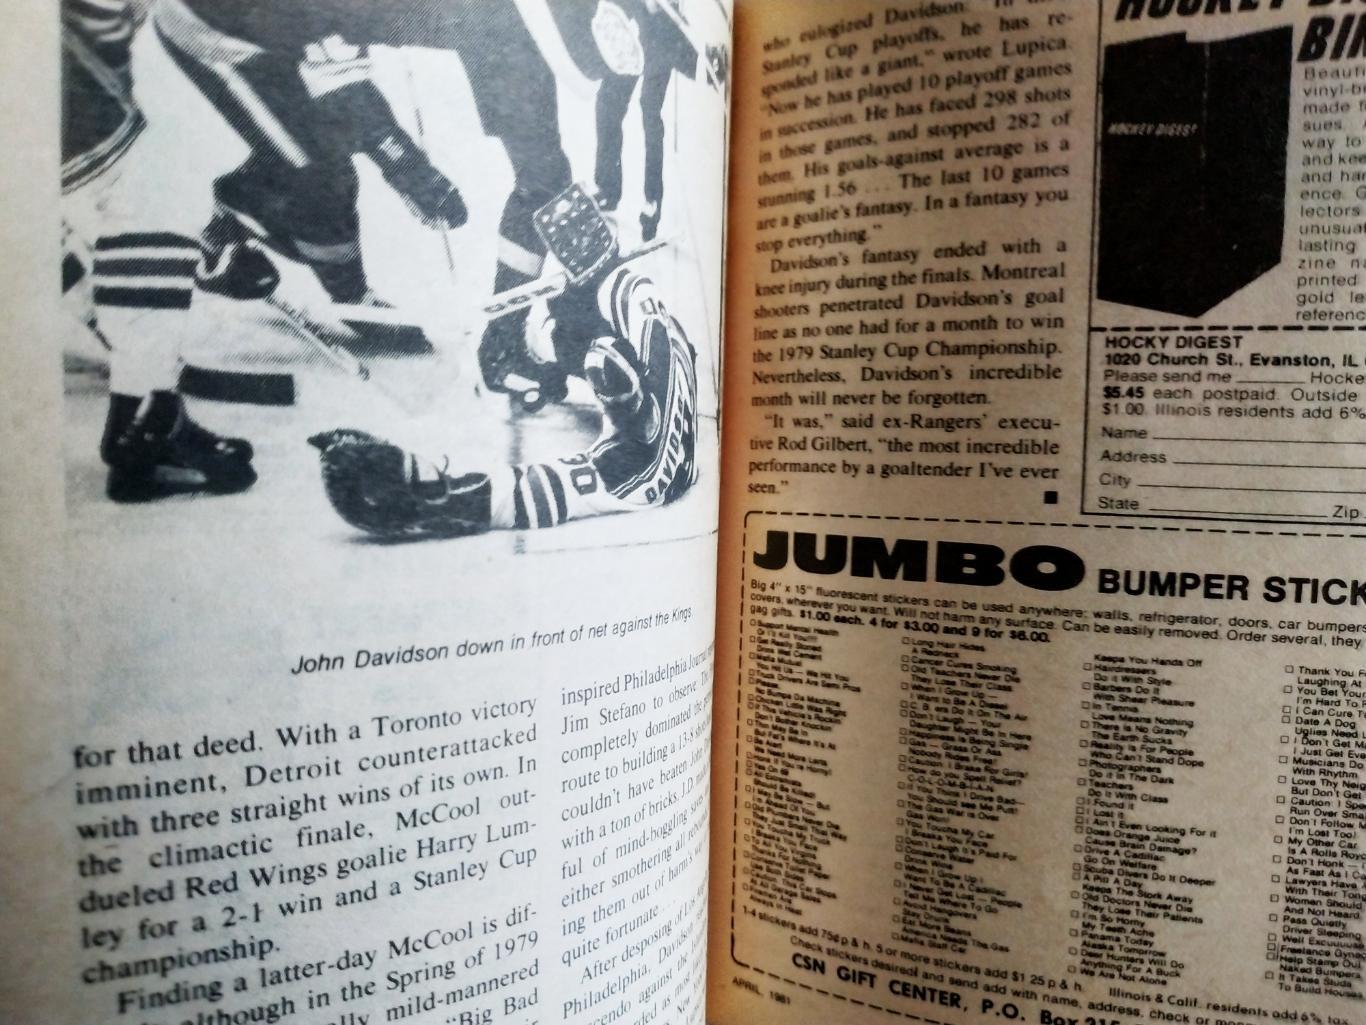 ХОККЕЙ ЖУРНАЛ ЕЖЕМЕСЯЧНИК НХЛ ХОККИ ДАЙДЖЕСТ NHL APRIL 1981 THE HOCKEY DIGEST 6